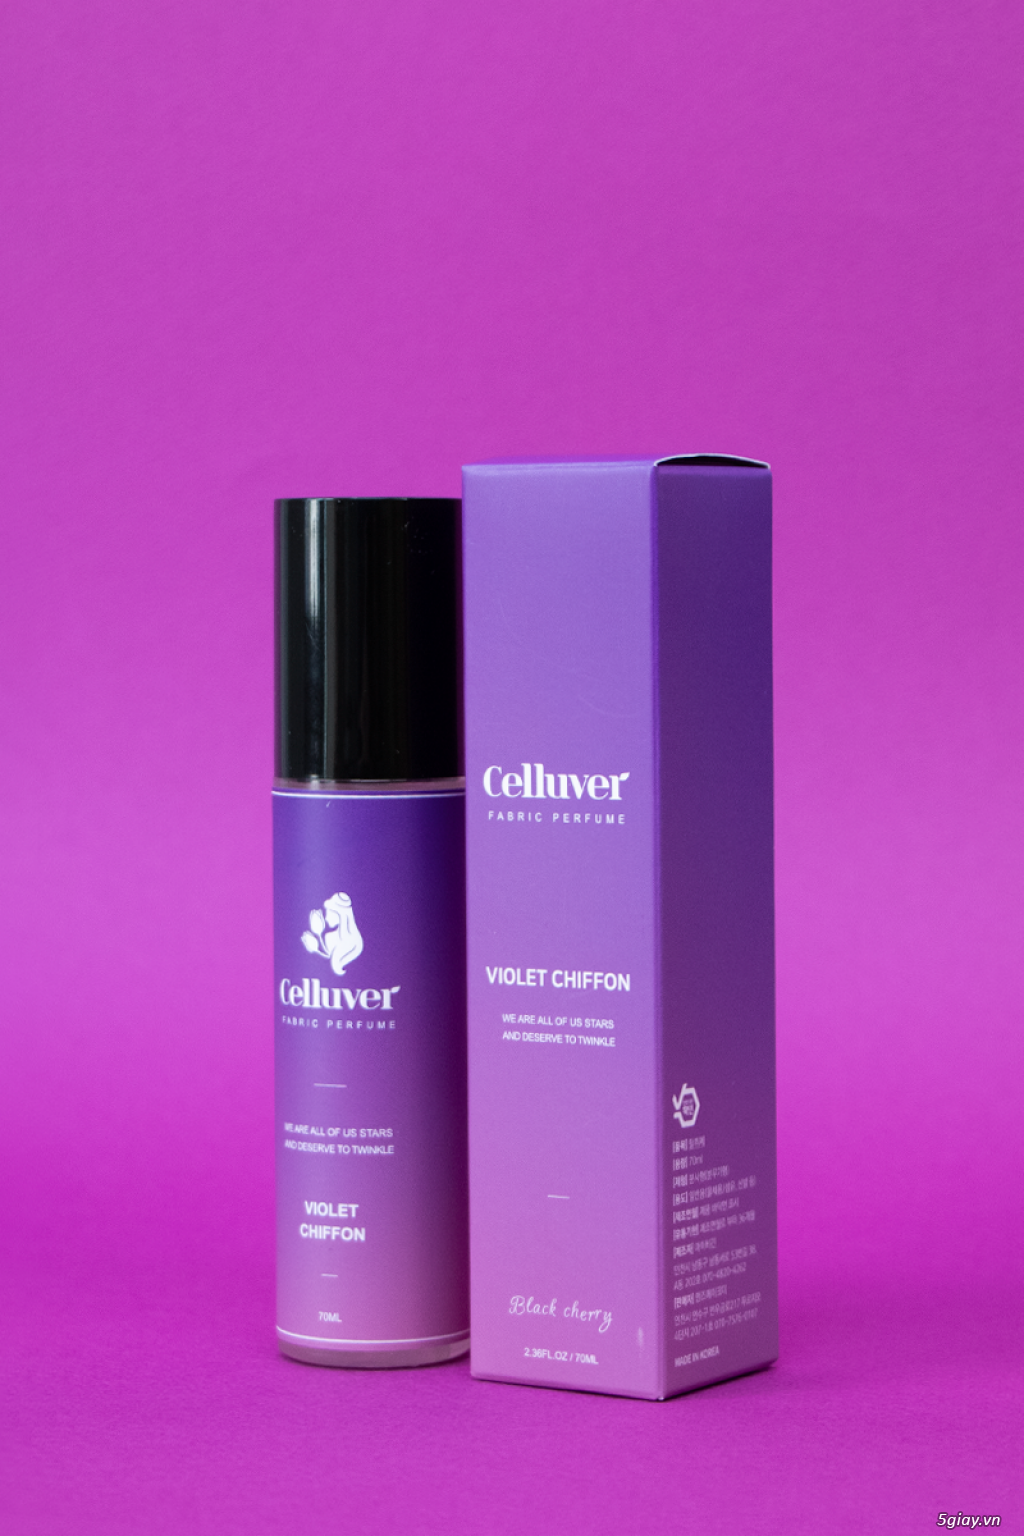 CELLUVER Nước Hoa Vải Fabric Perfume - Celluver Violet Chiffon 70ml